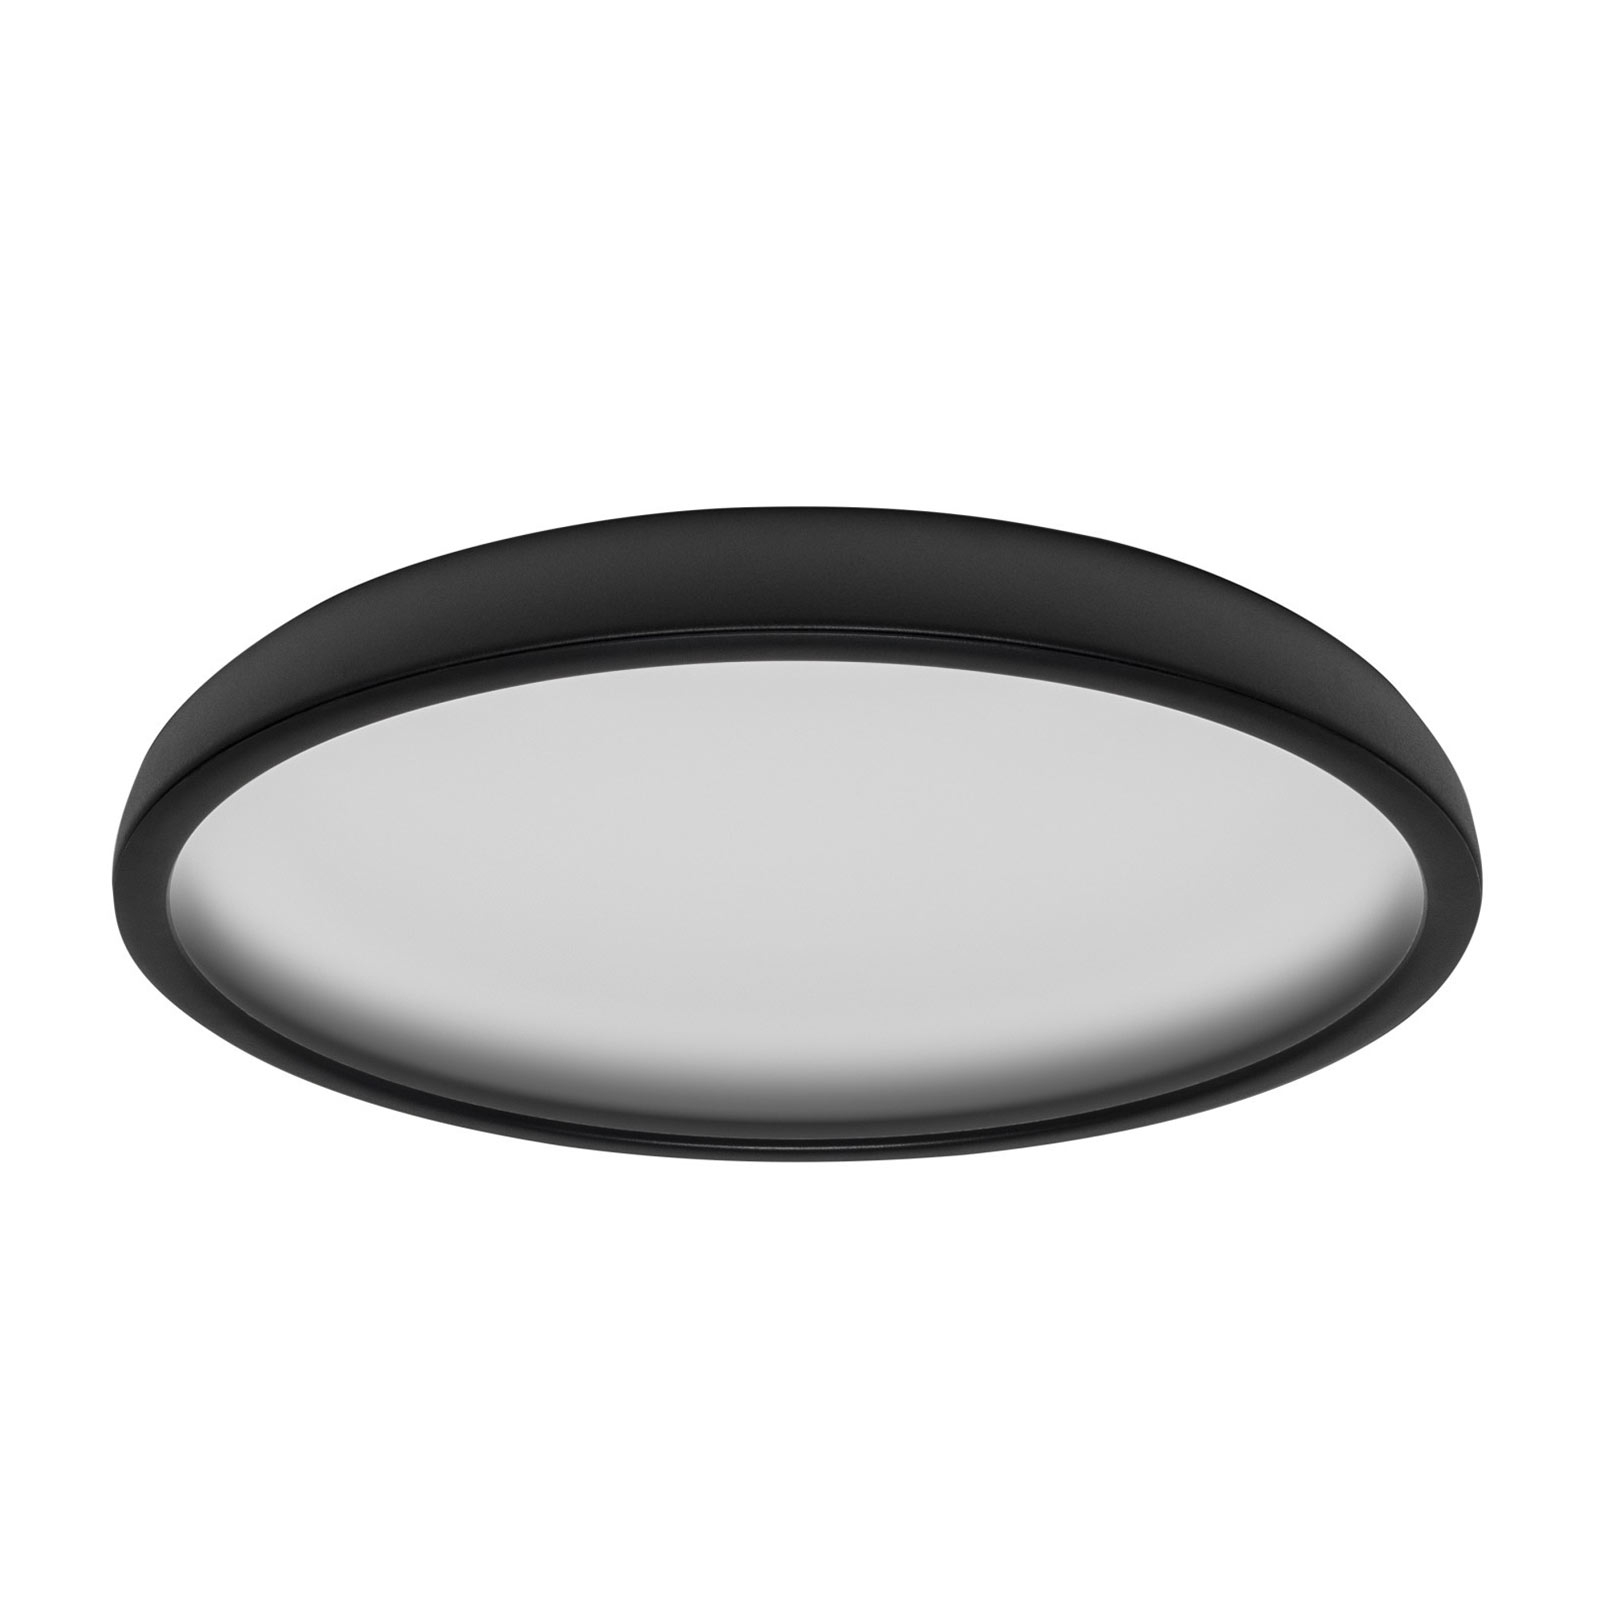 Stropné LED svietidlo Reflexio, Ø 46 cm, čierne